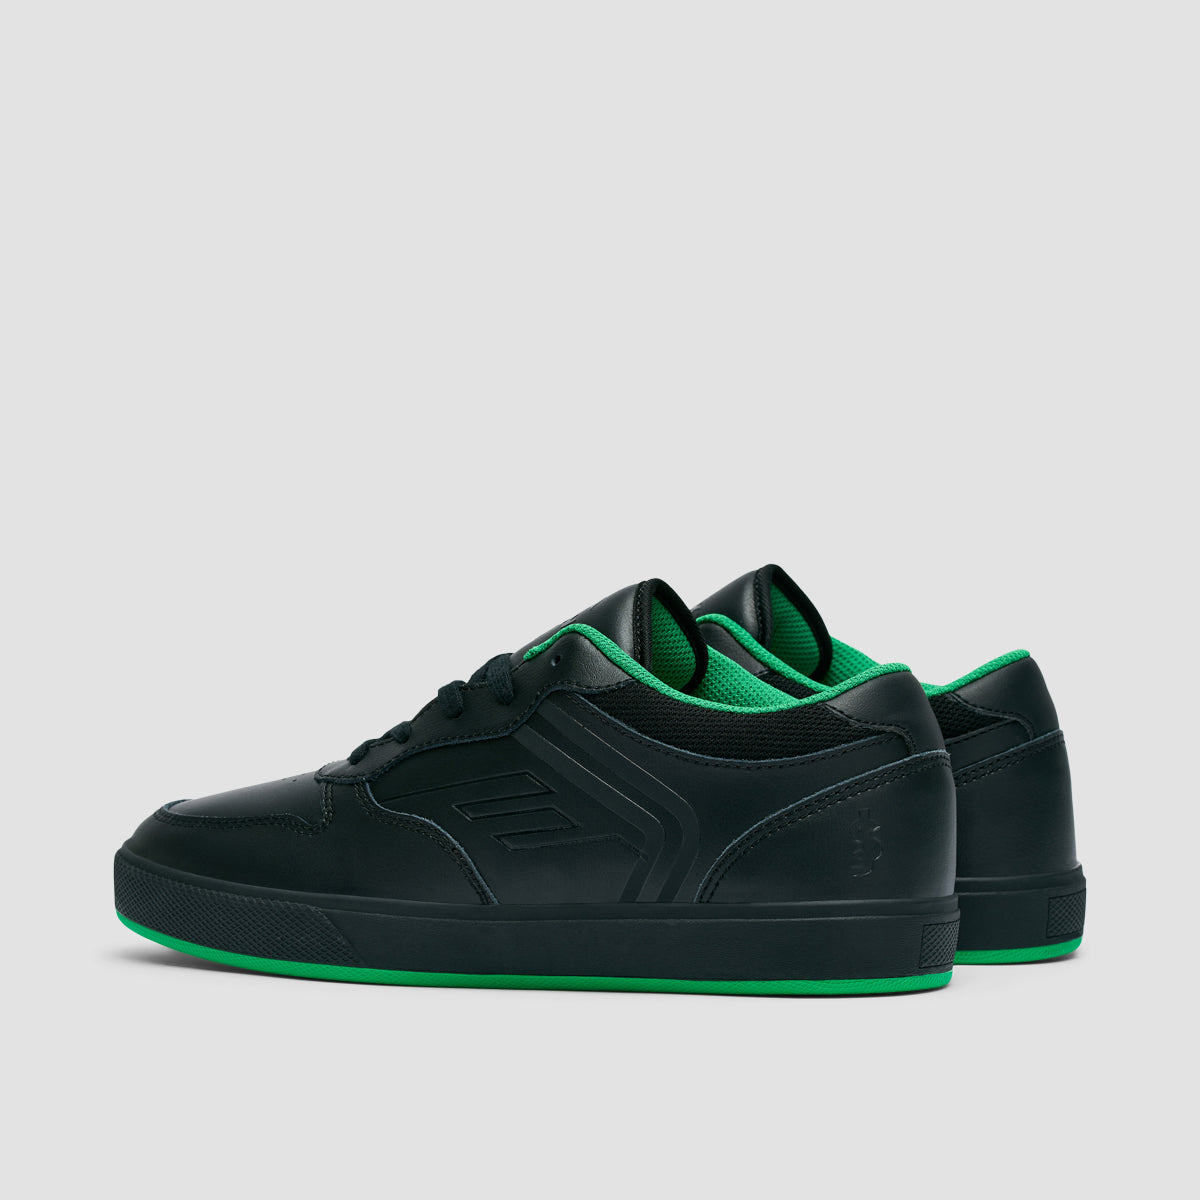 Emerica KSL G6 X Shake Junt Shoes Black